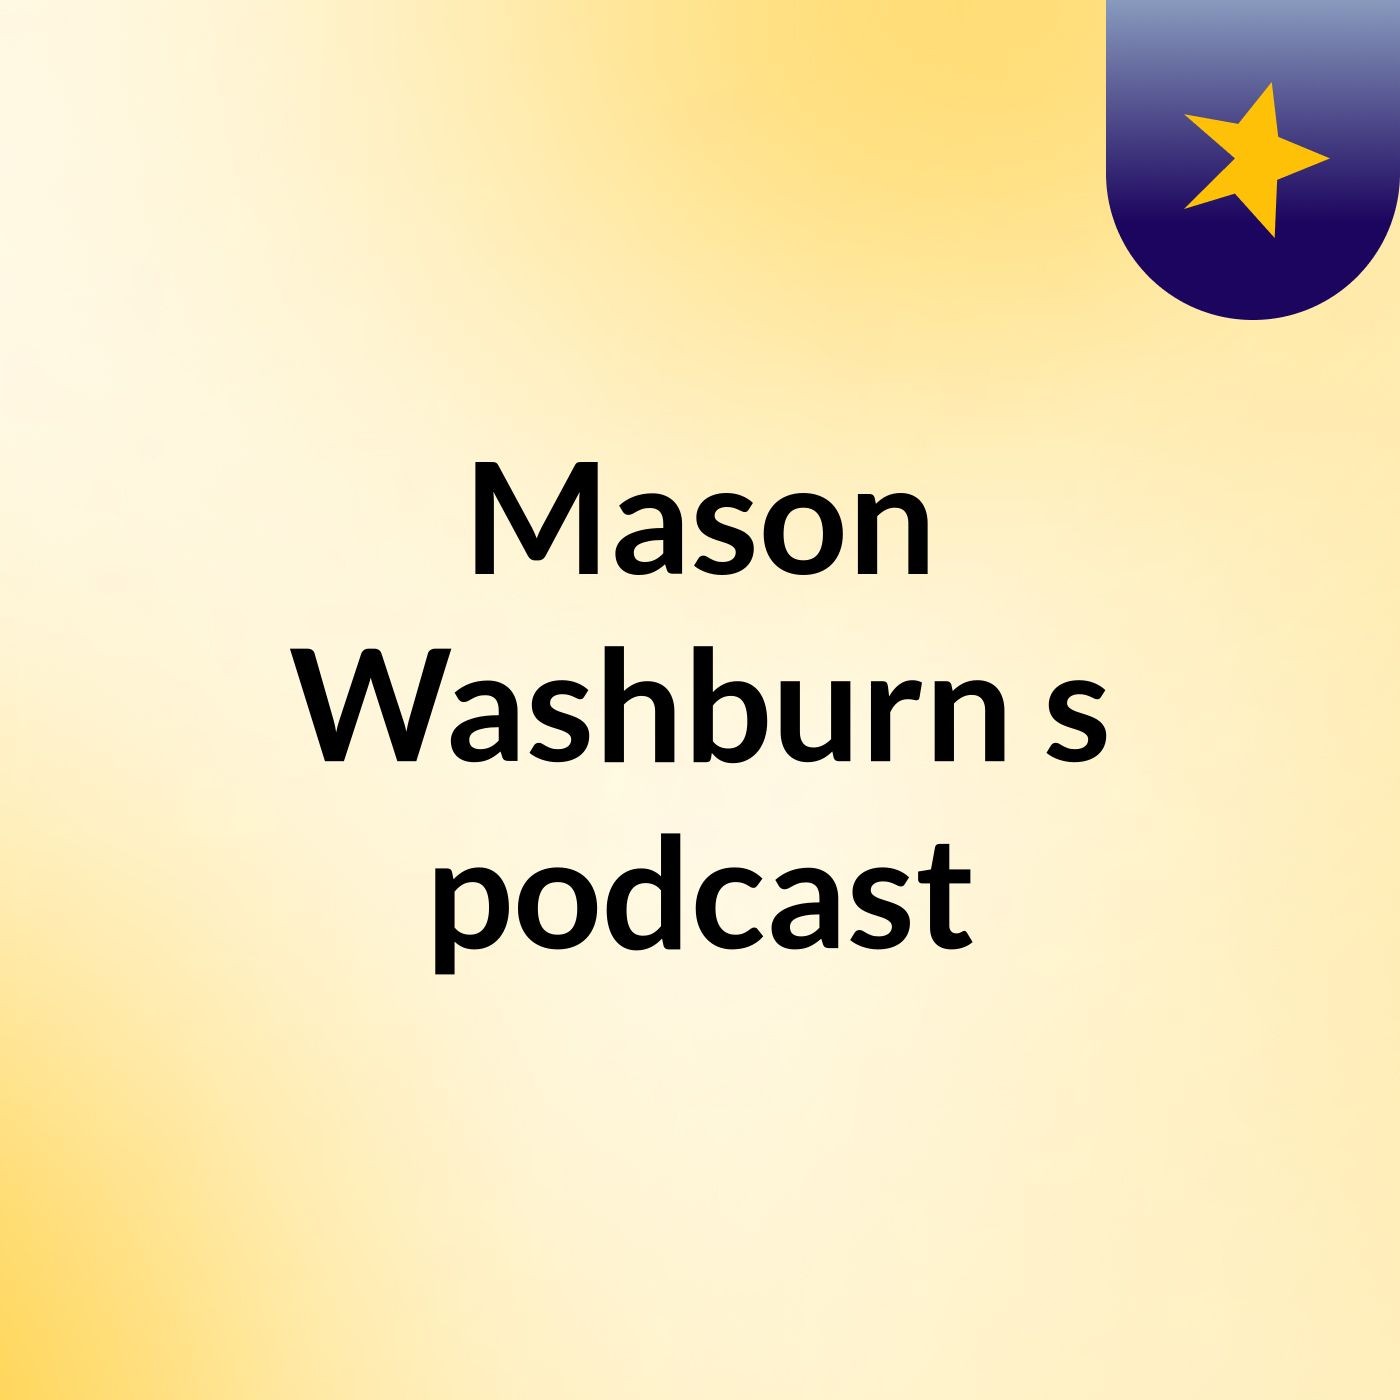 Mason Washburn's podcast